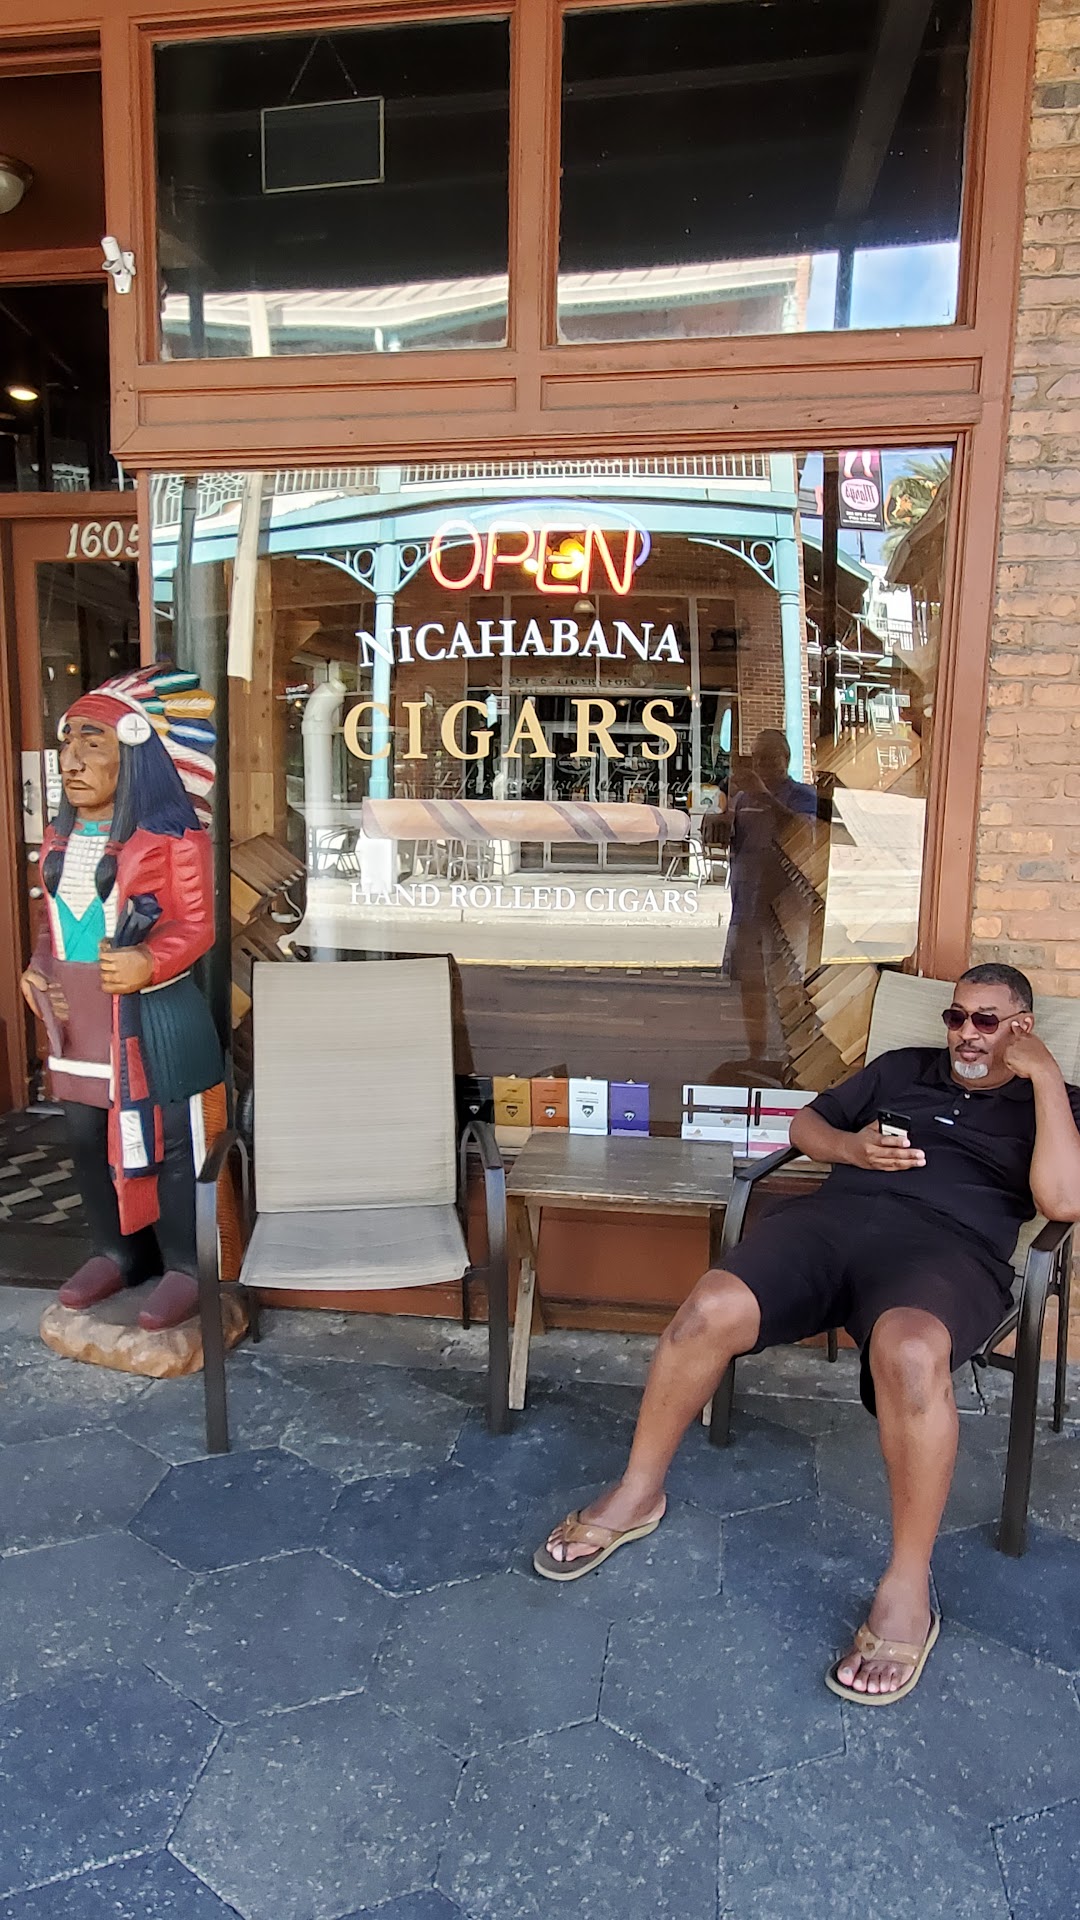 Nicahabana Cigars